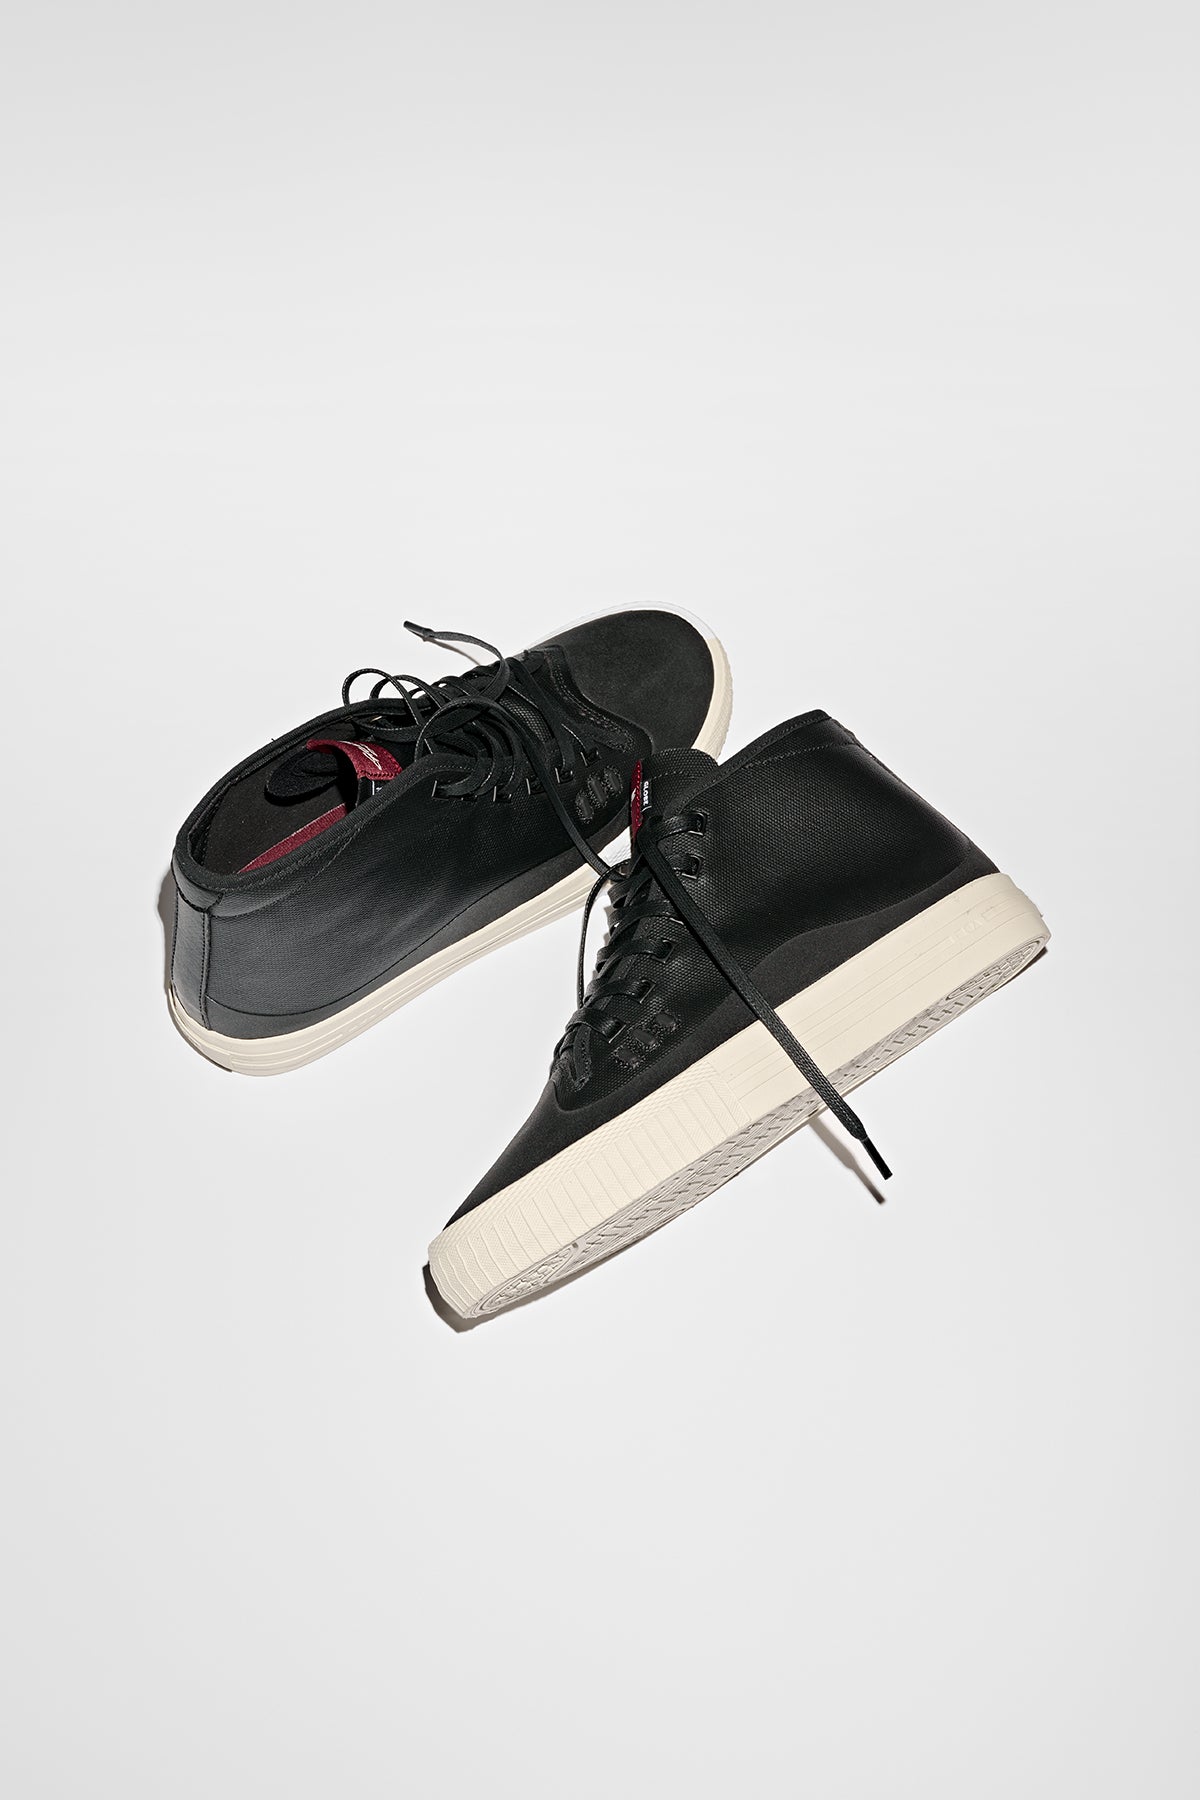 Globe - Gillette Mid - Noir/Crème - skateboard Chaussures